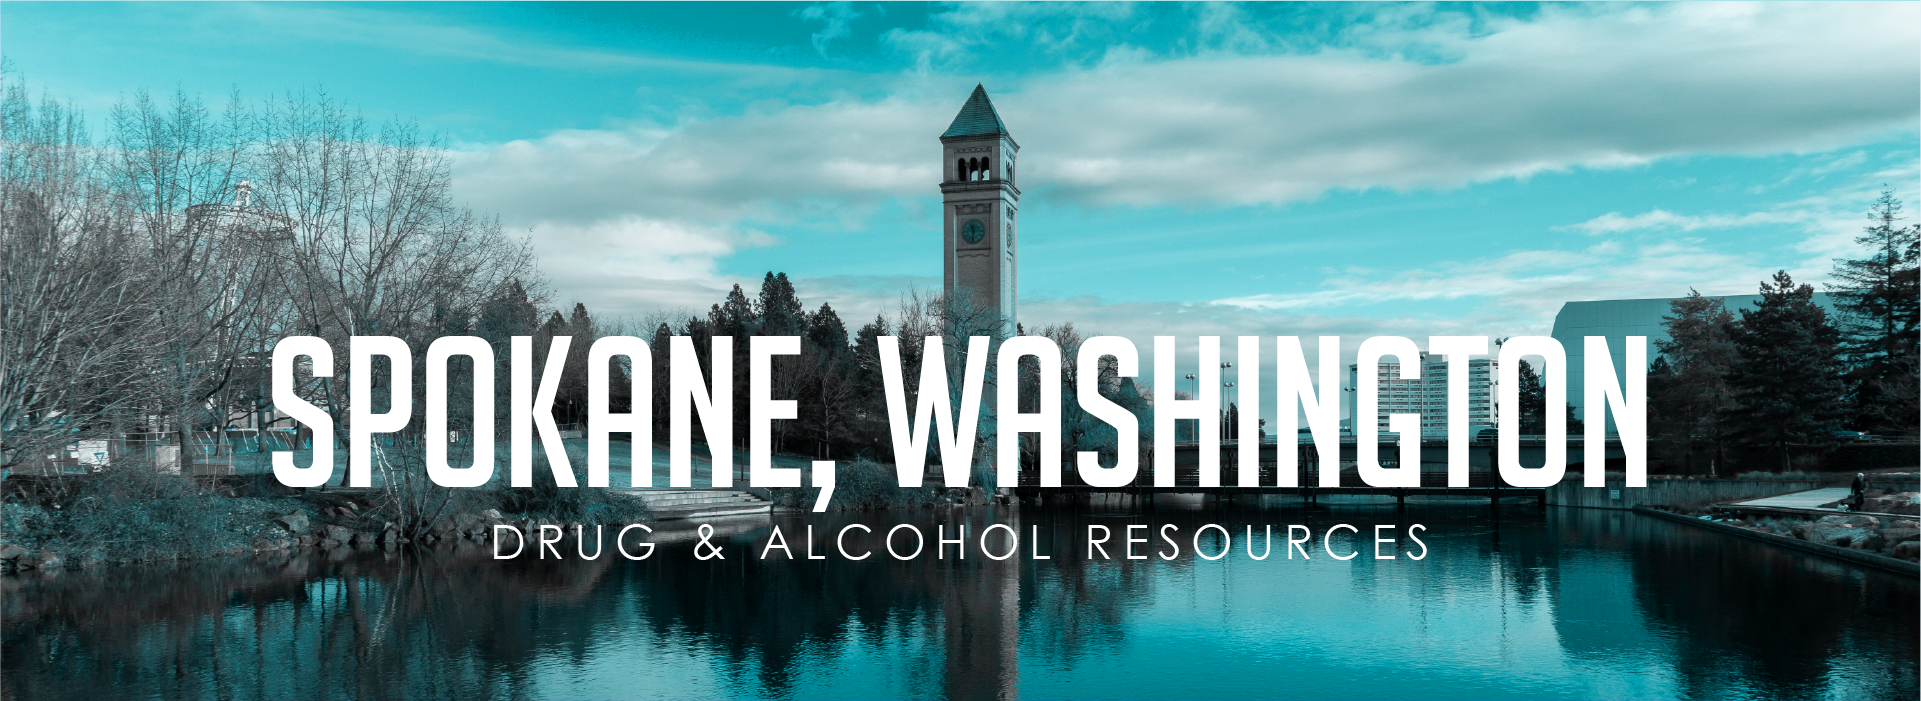 Spokane, Washington Addiction Information